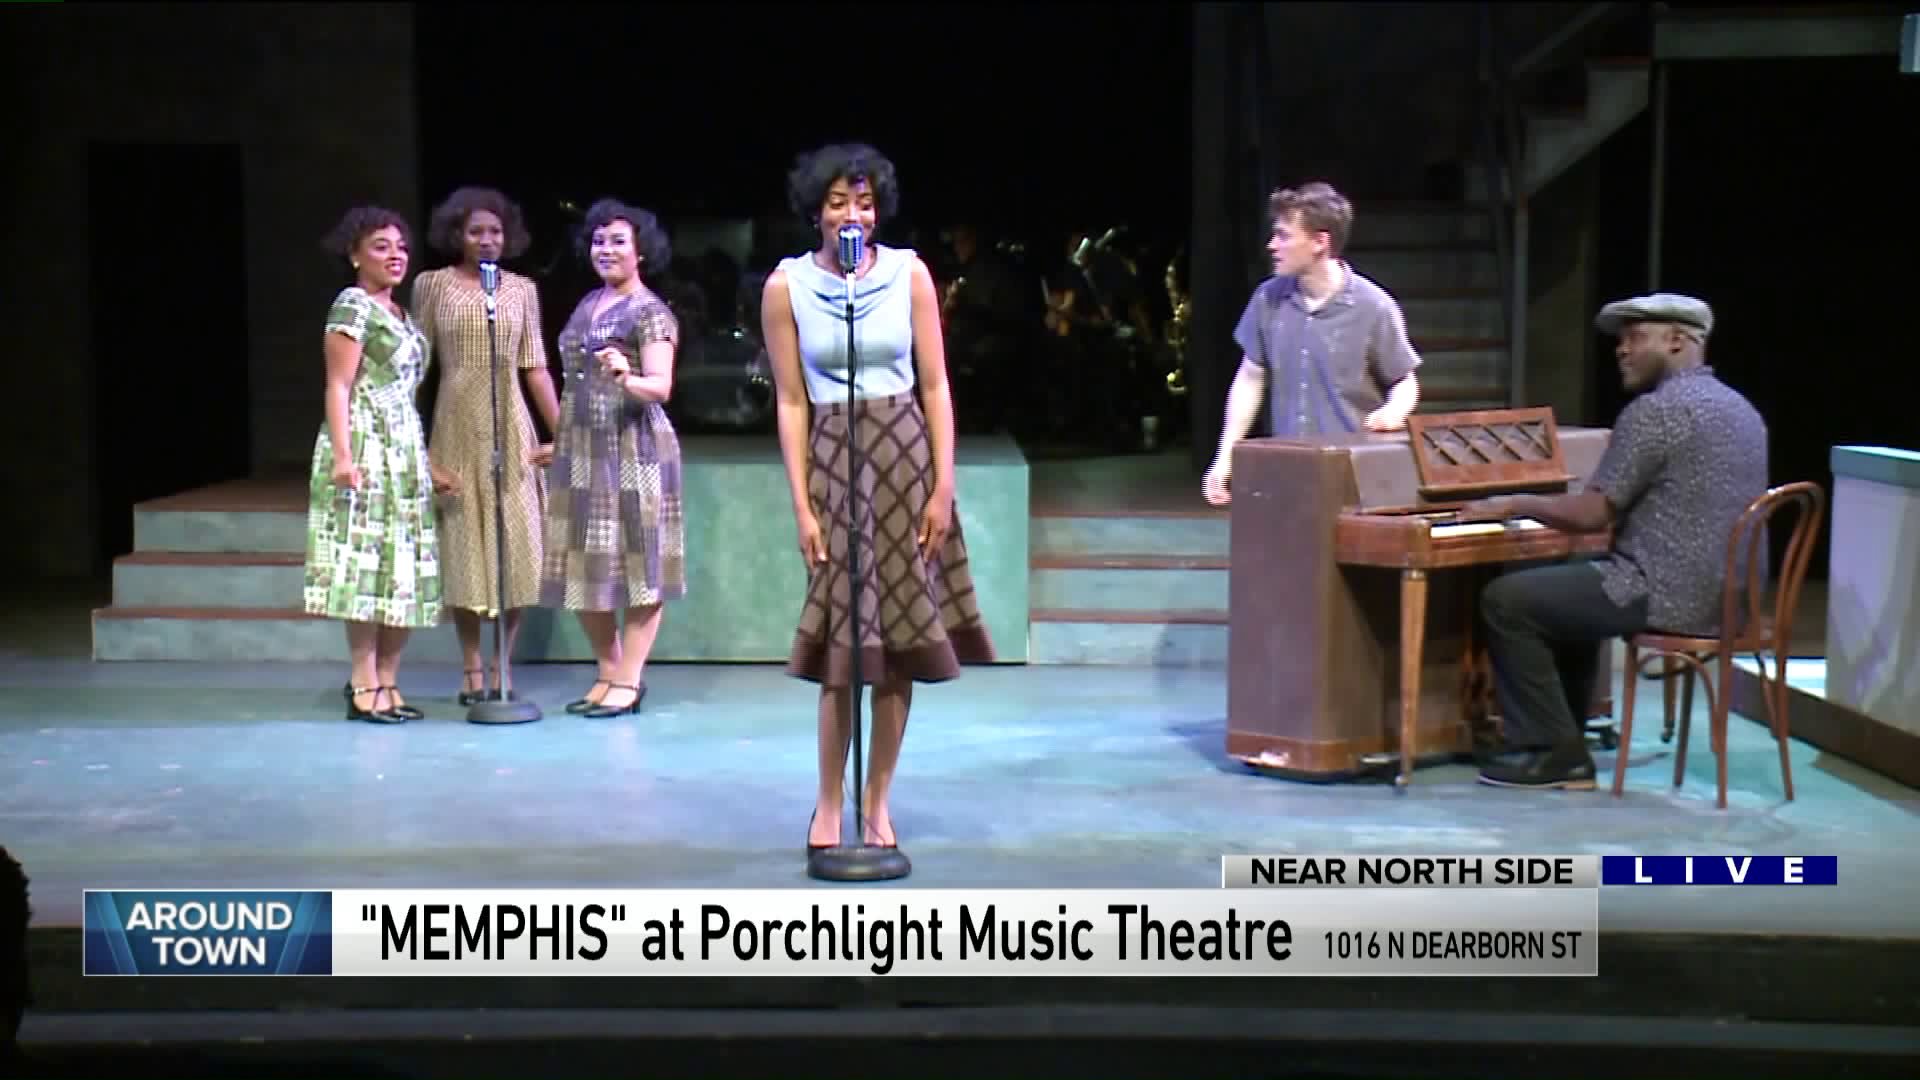 Around Town checks out Porchlight Music Theatre’s Memphis